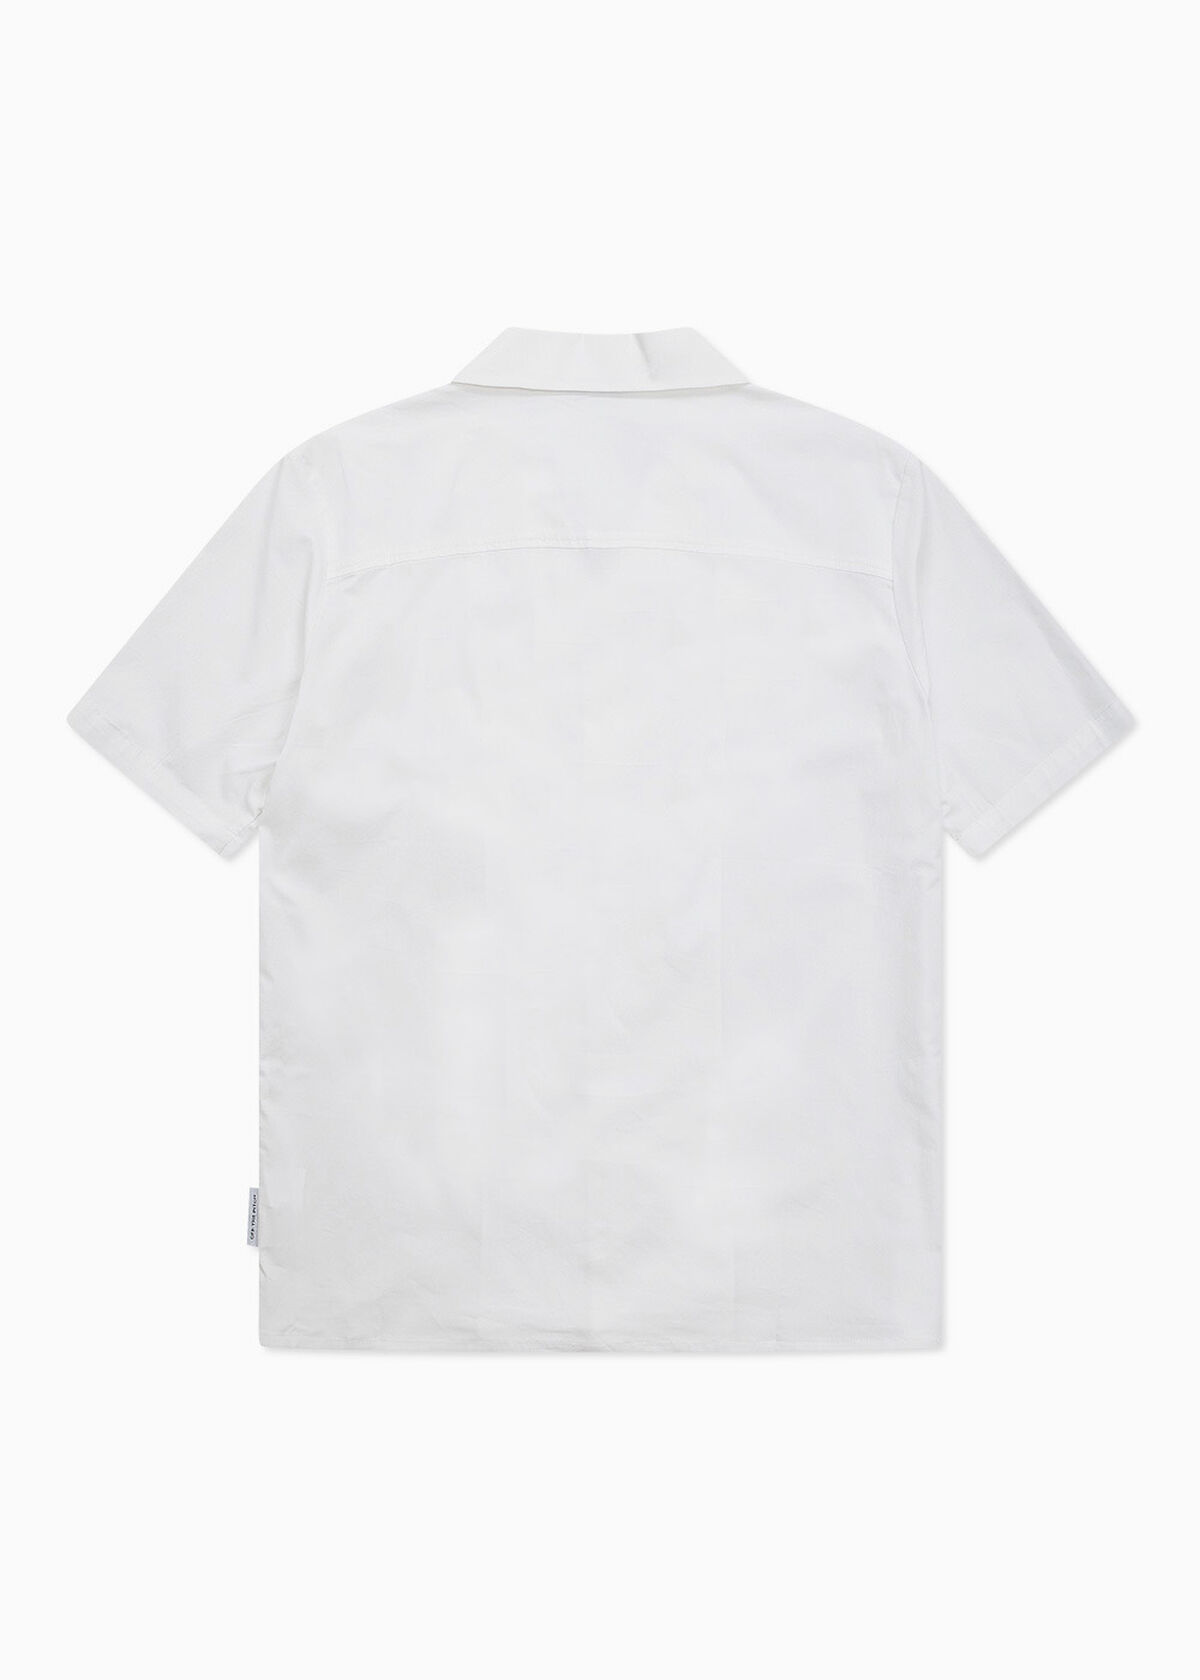 Rooftop Summer Shirt - 97% Polyester / 3% Elastane, Off white, hi-res